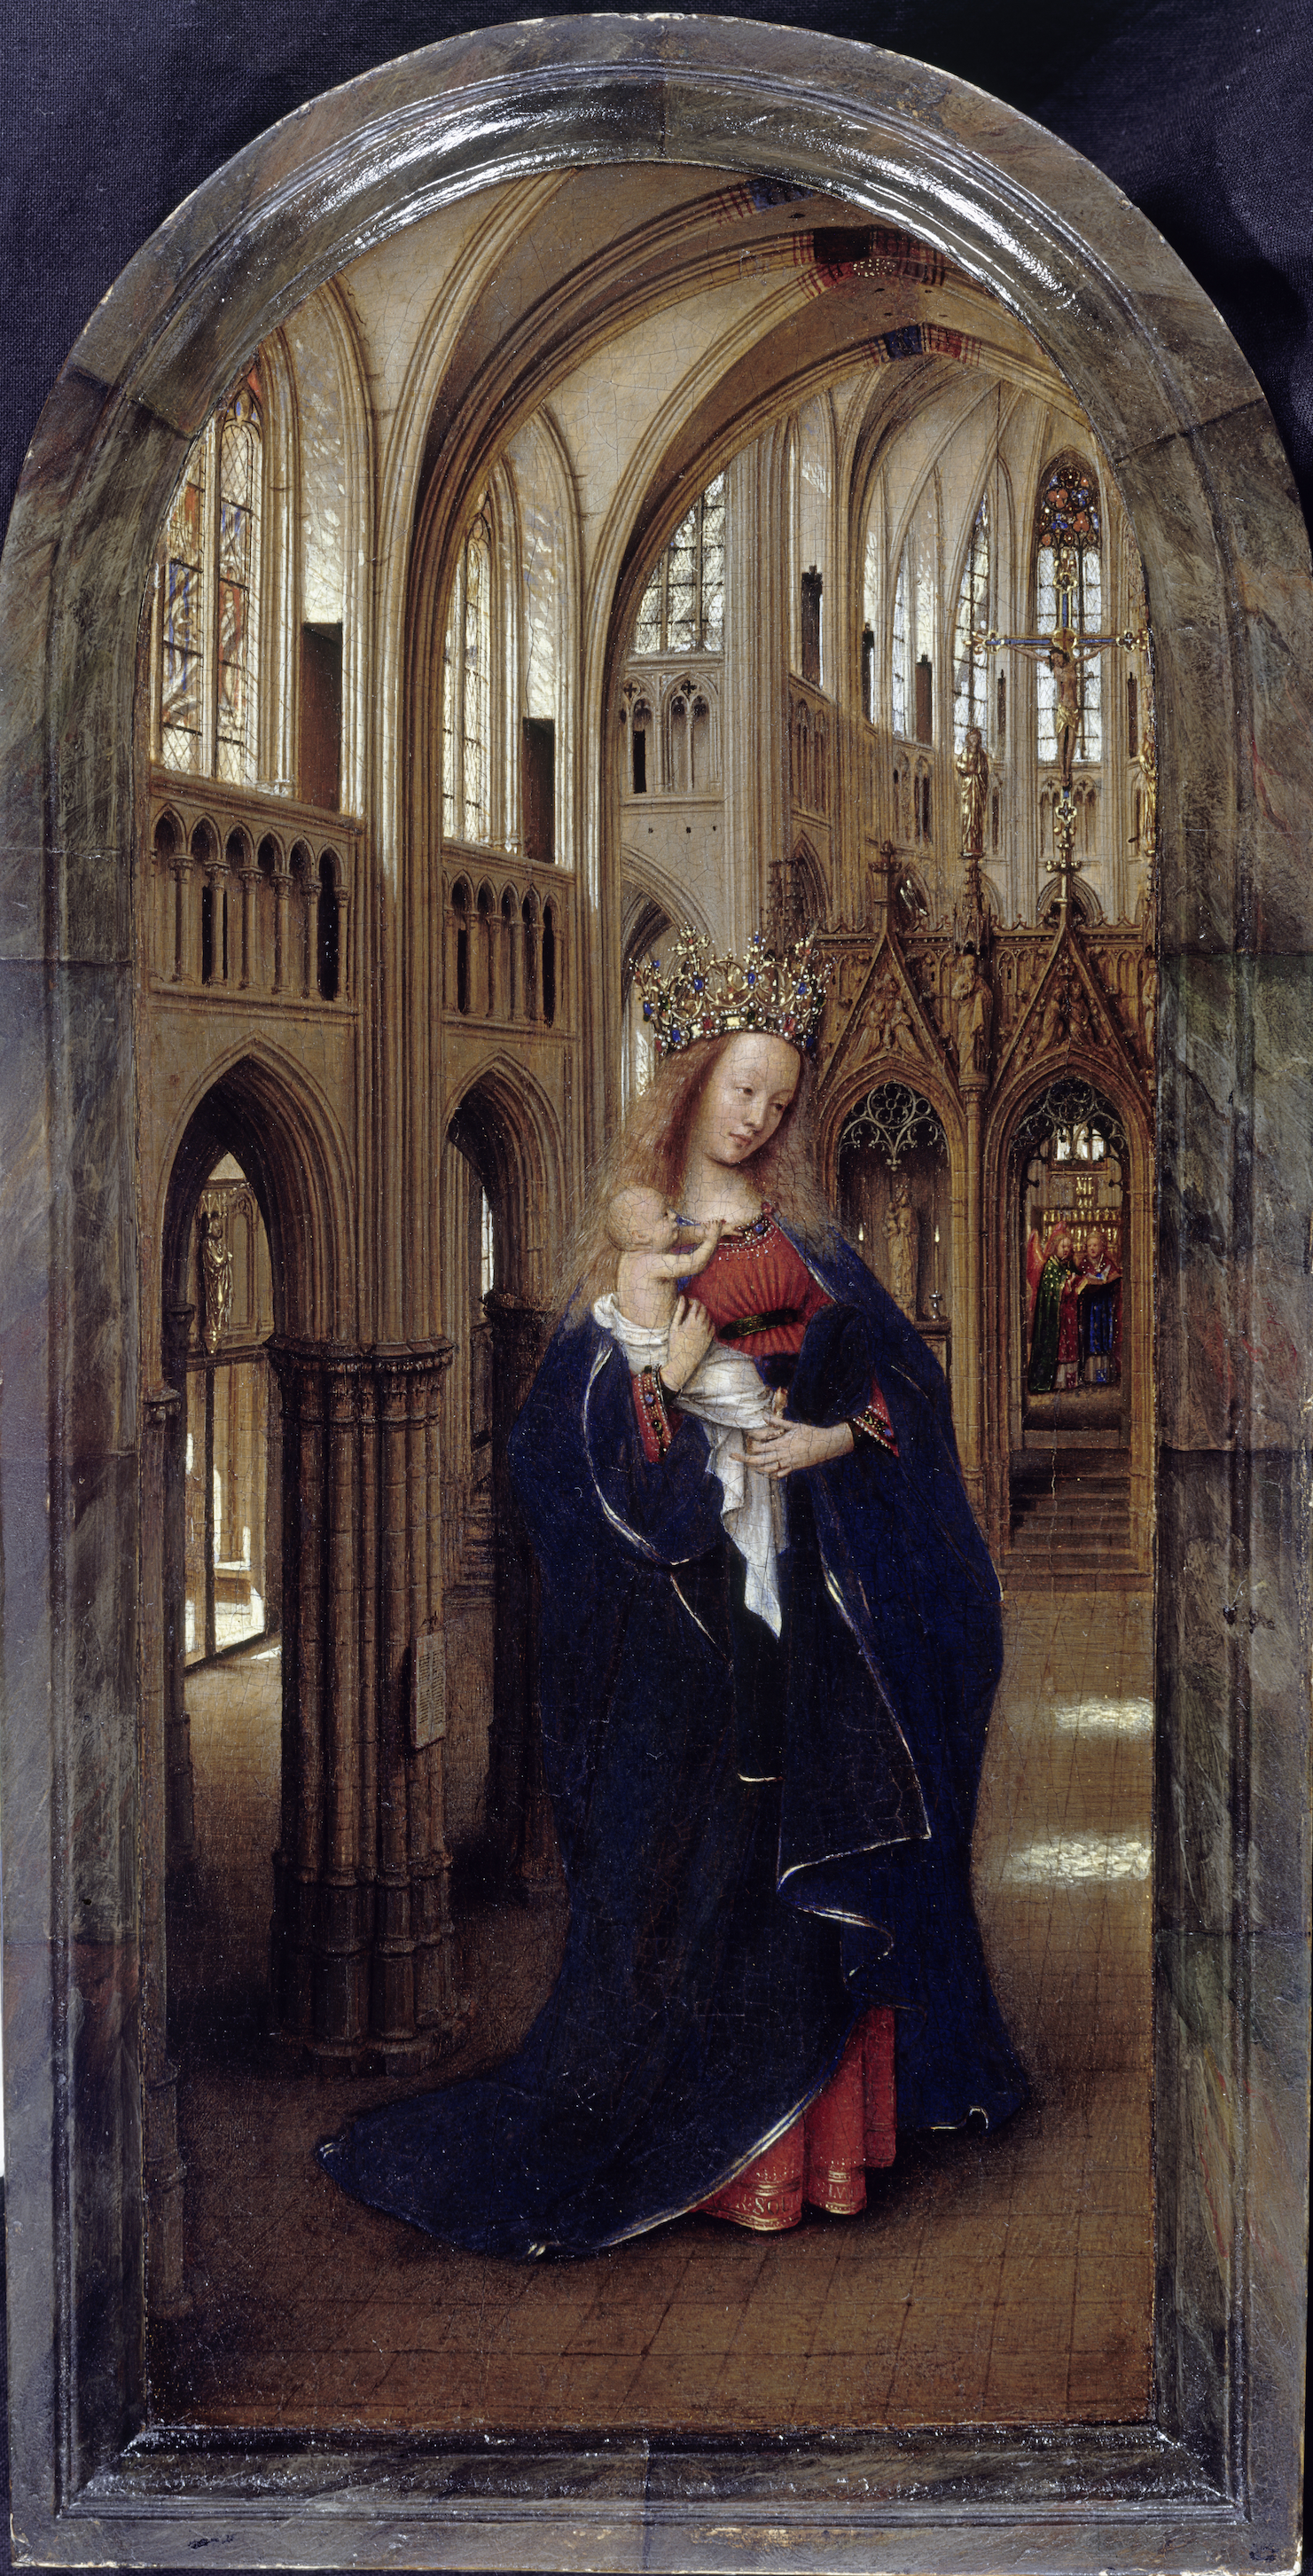 Madonna in the Church by Jan van Eyck - c. 1425 - 31,1 x 13,9 cm Gemäldegalerie